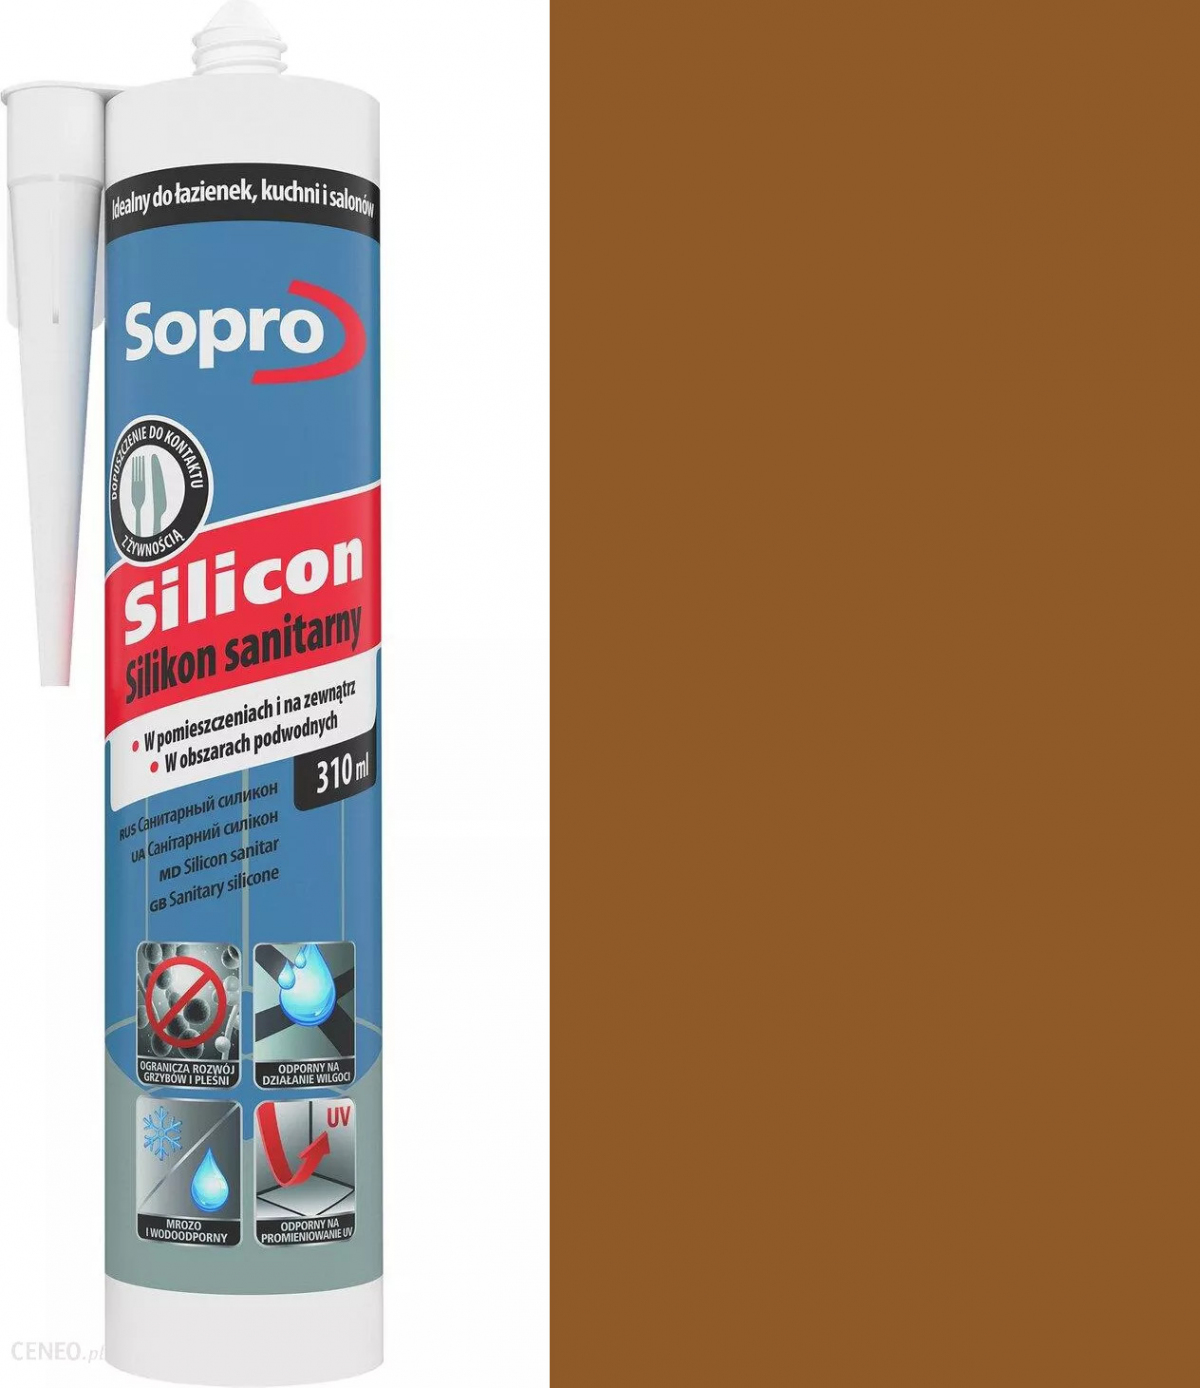 Sopro Silikon sanitarny kolor 58 Umbra 310 ml